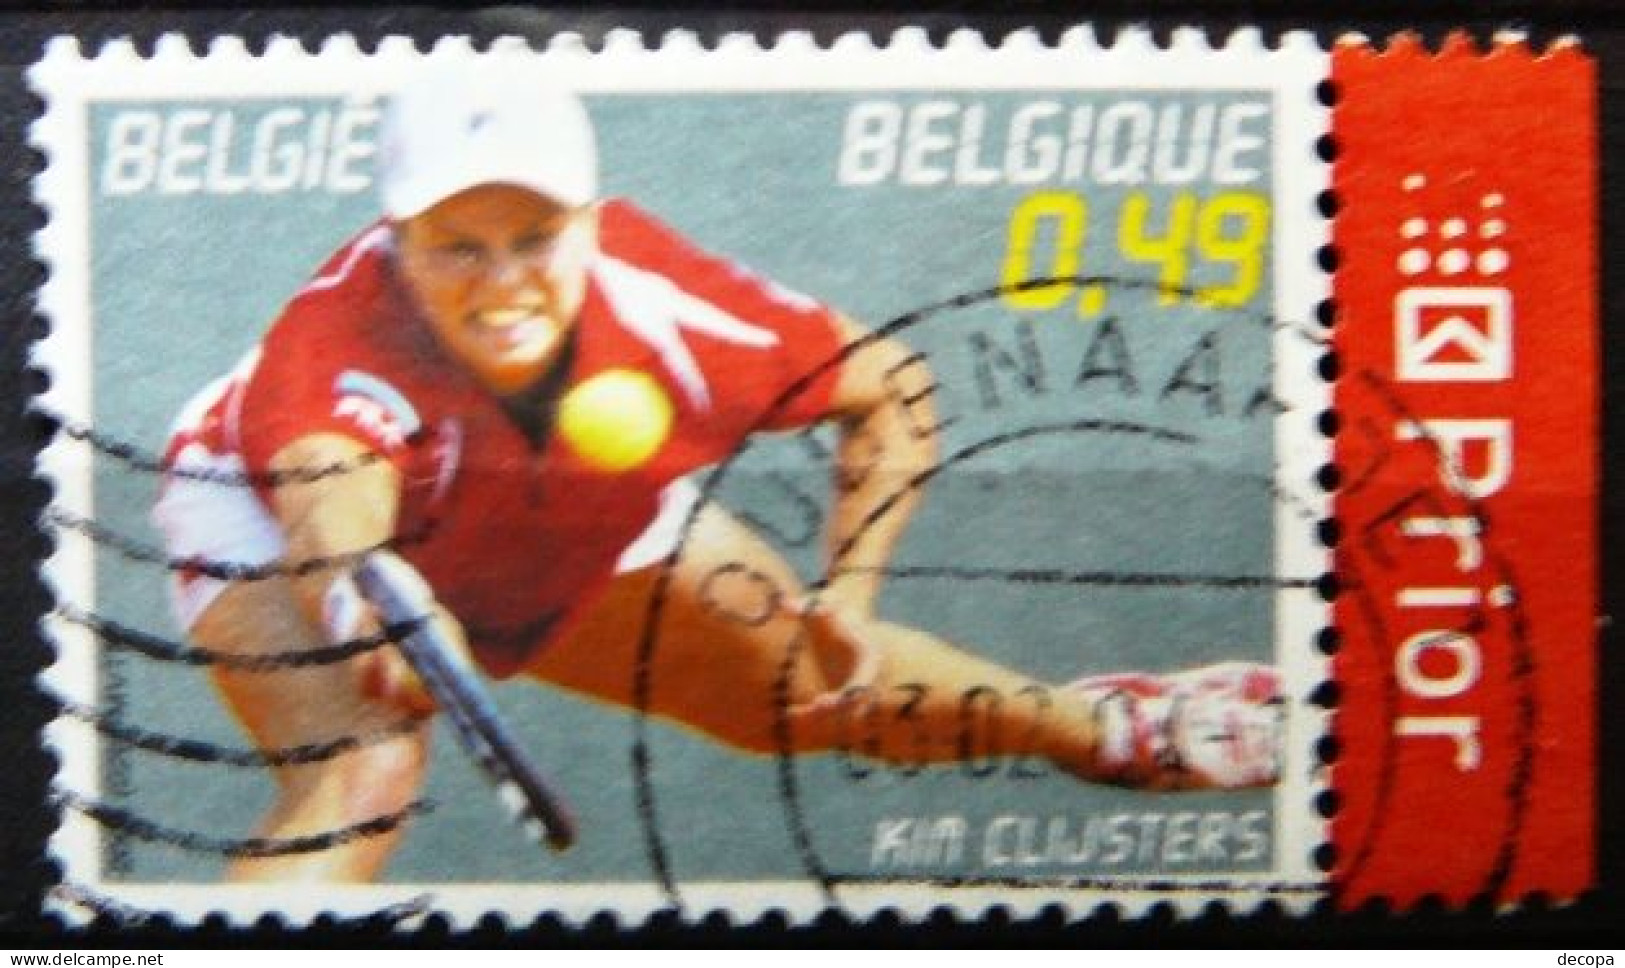 (dcbnp-096)  Belgium Mi 3275 Used : Kim Clijsters - Tennis